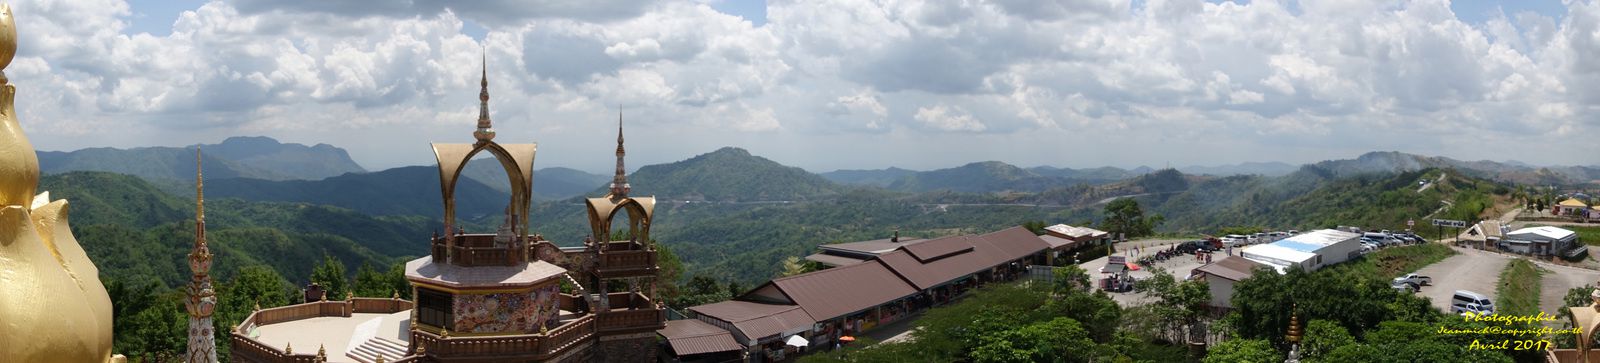 Wat Phasorn Kaew  ธรรมสถานผาซ่อนแก้ว (Suite des photos) Thaïlande Petchabun